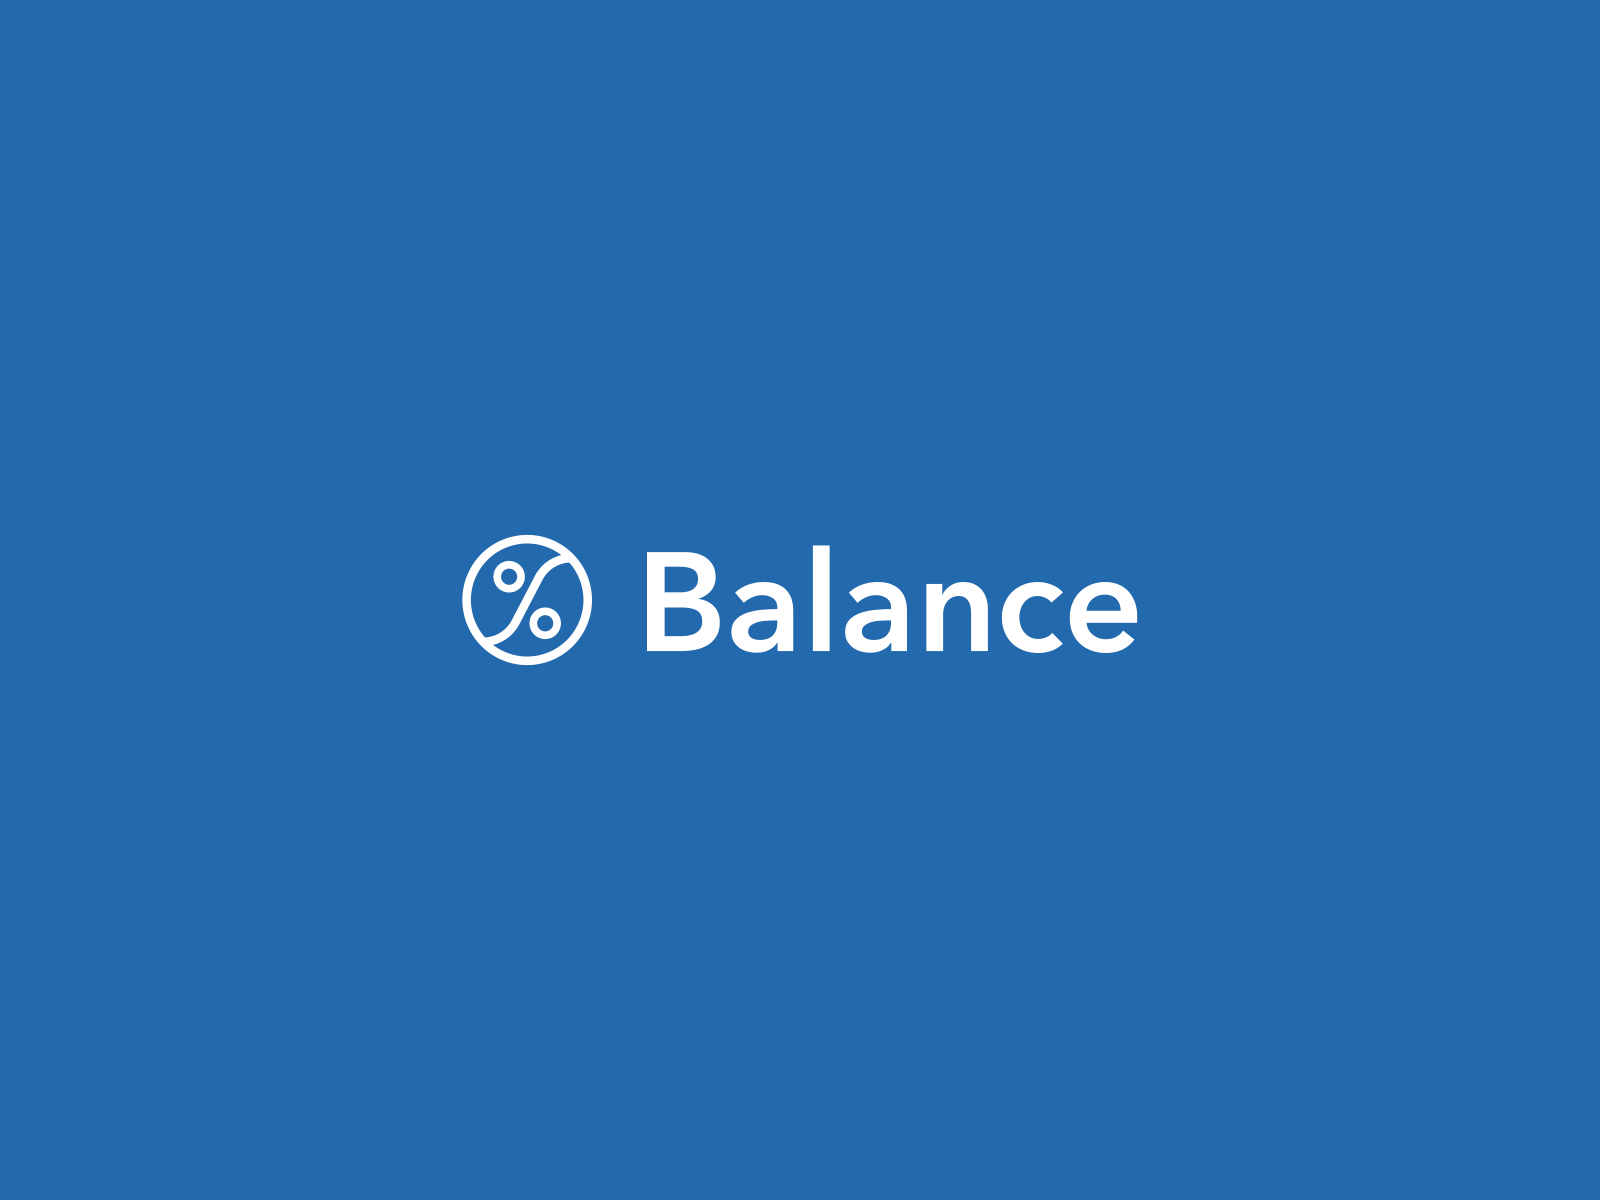 Balance logo by Sergey Yakovenko on Dribbble